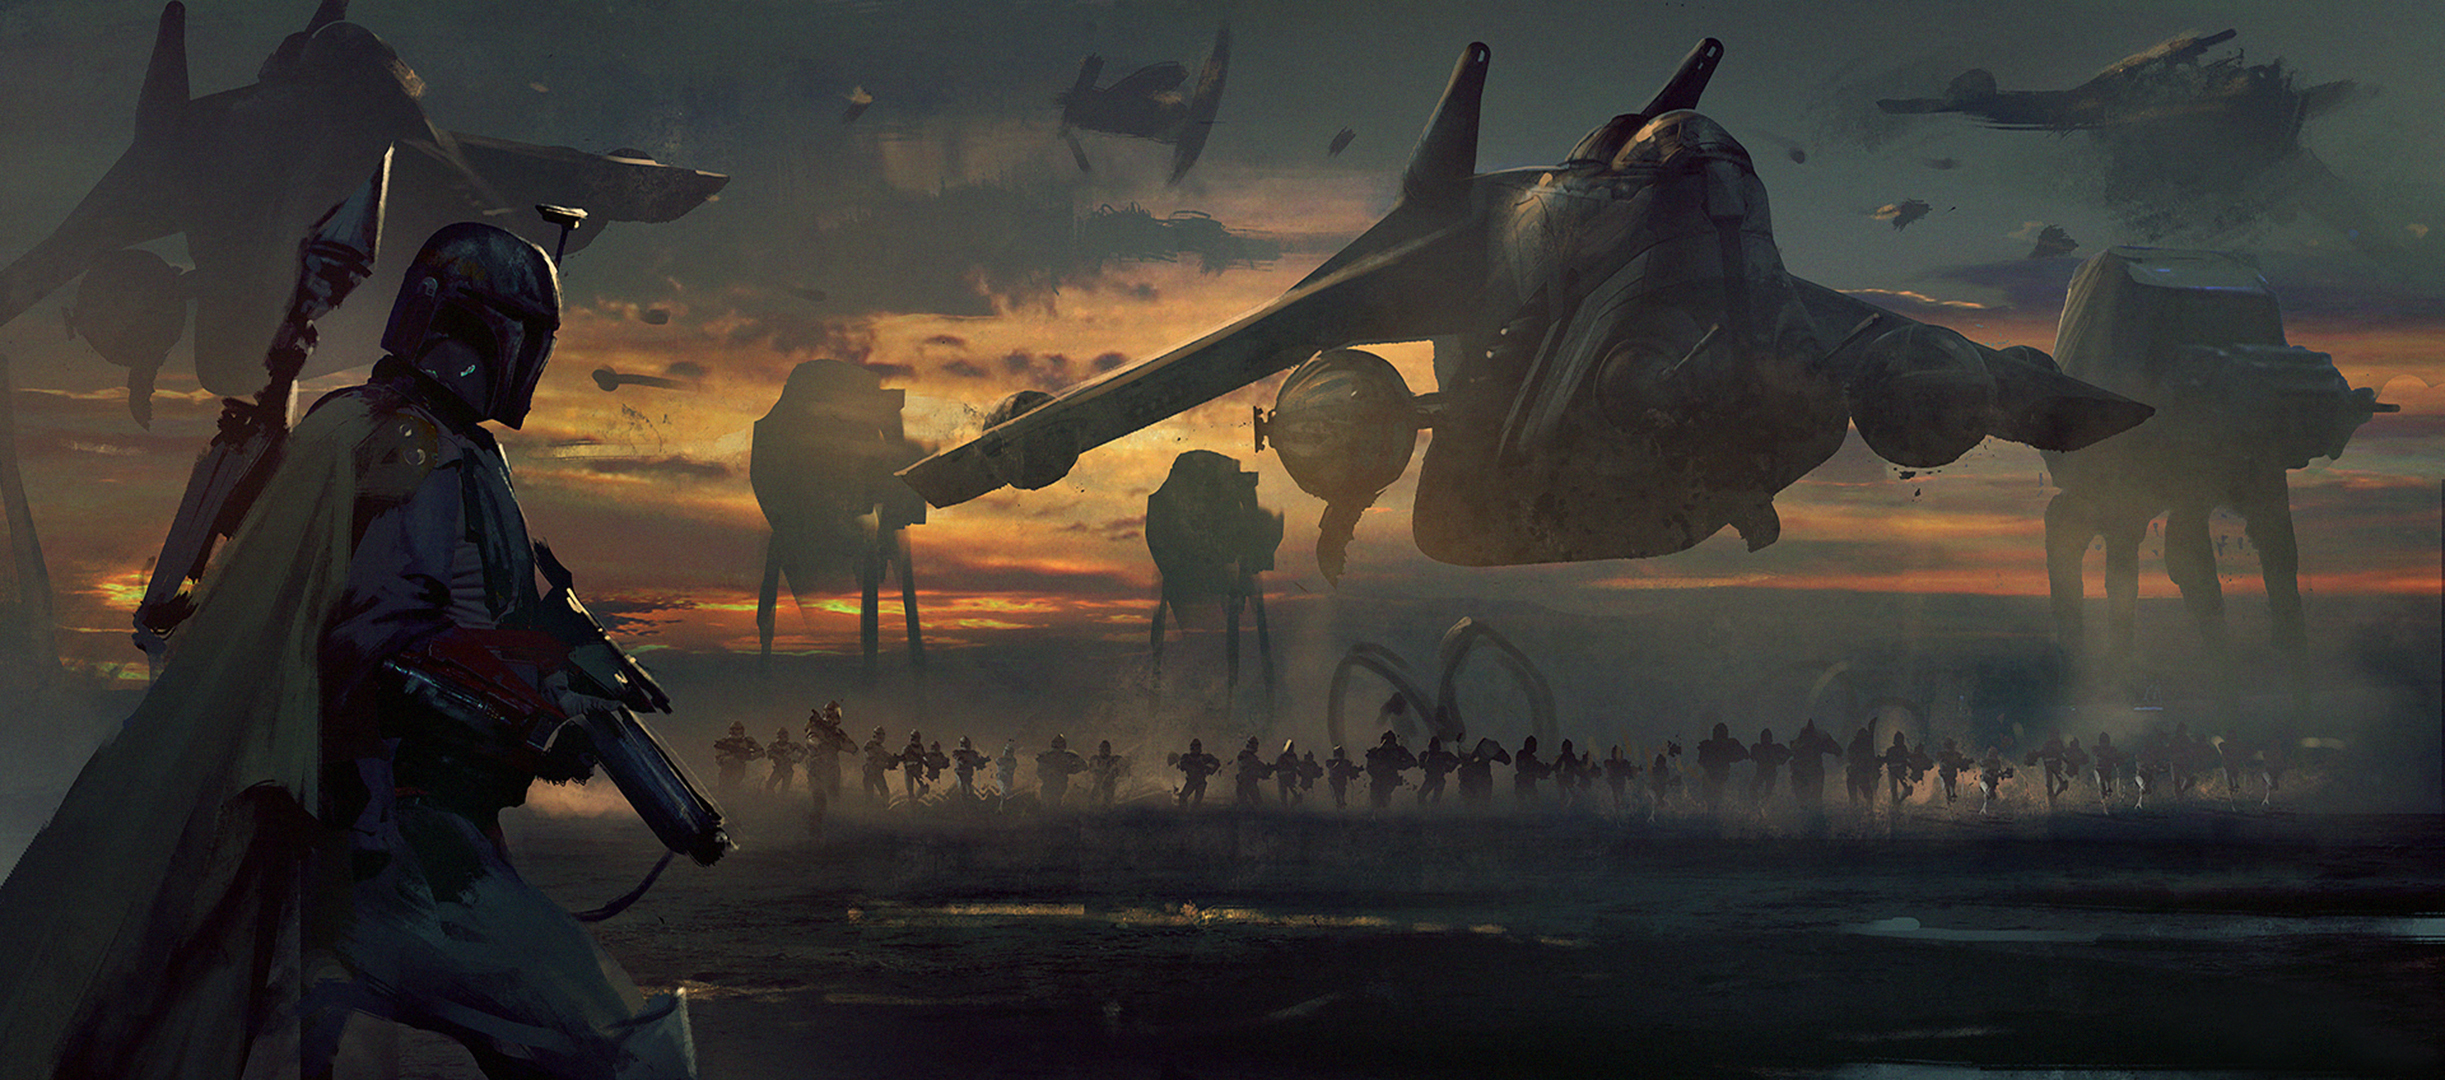 General 2445x1080 artwork weapon futuristic science fiction illustration Star Wars Boba Fett